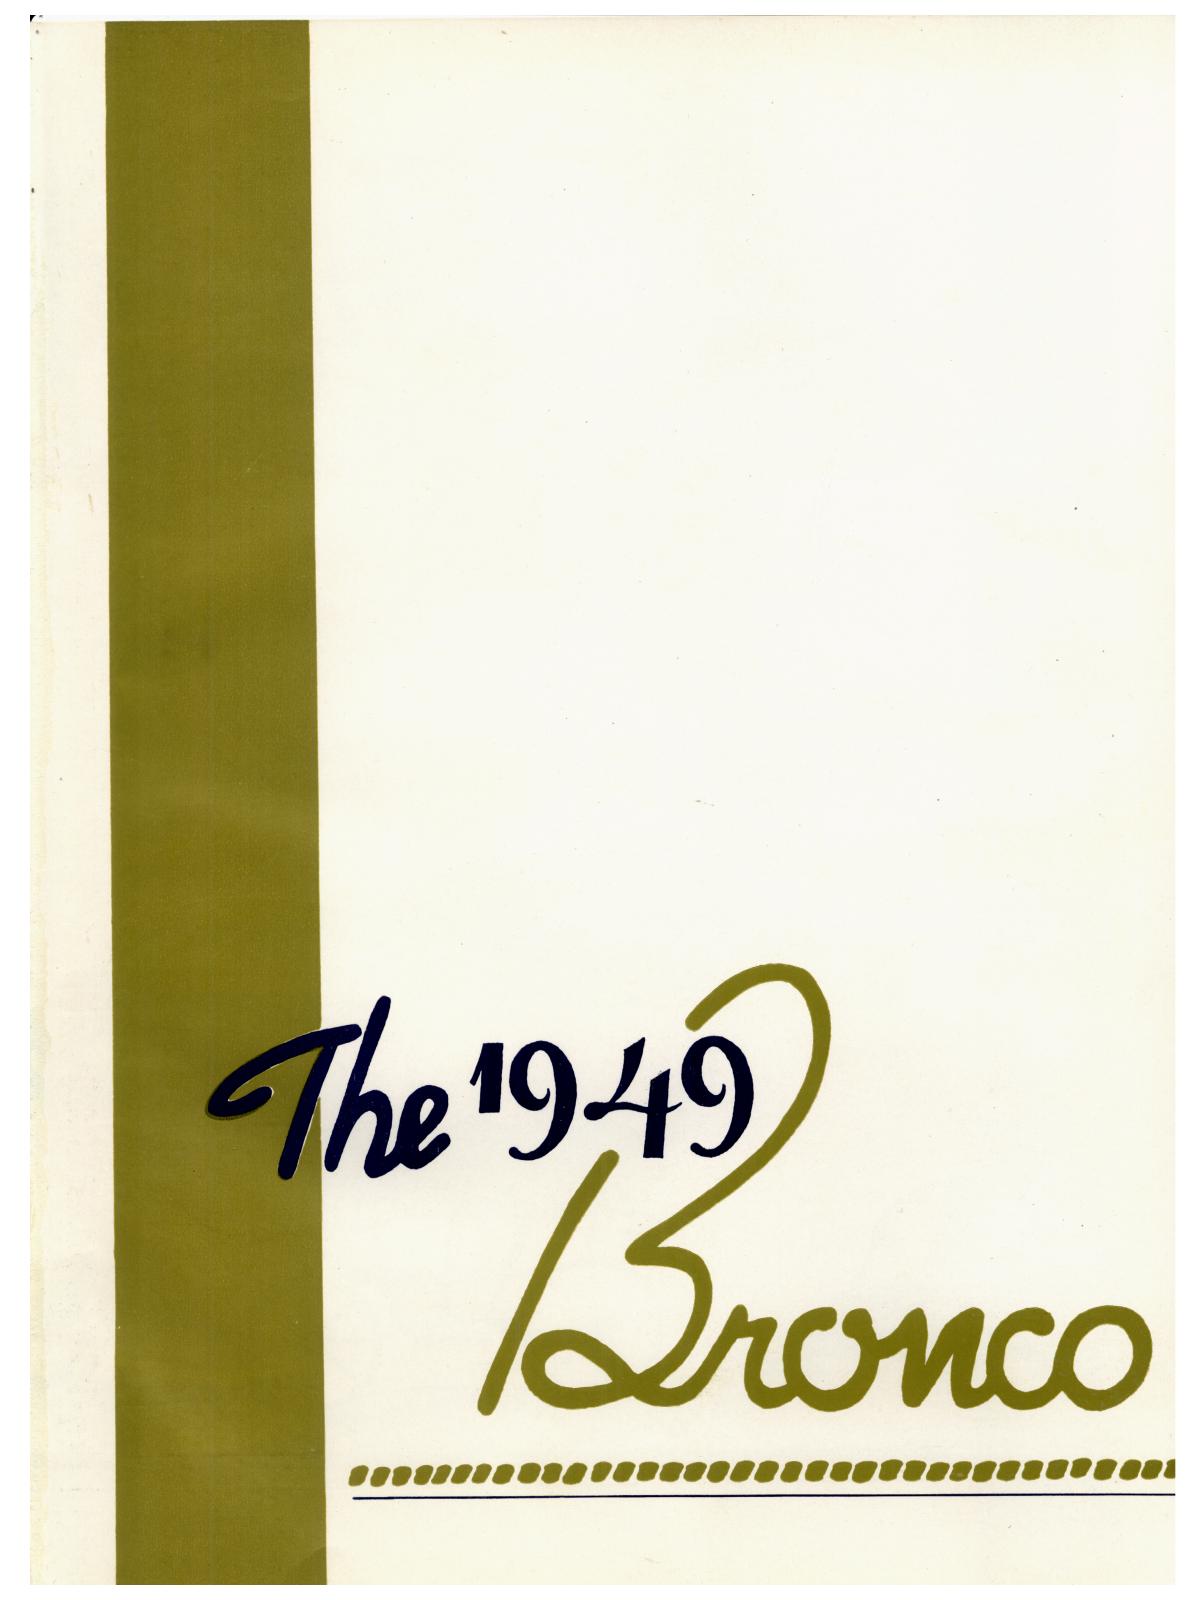 The Bronco, Yearbook of Hardin-Simmons University, 1949
                                                
                                                    1
                                                